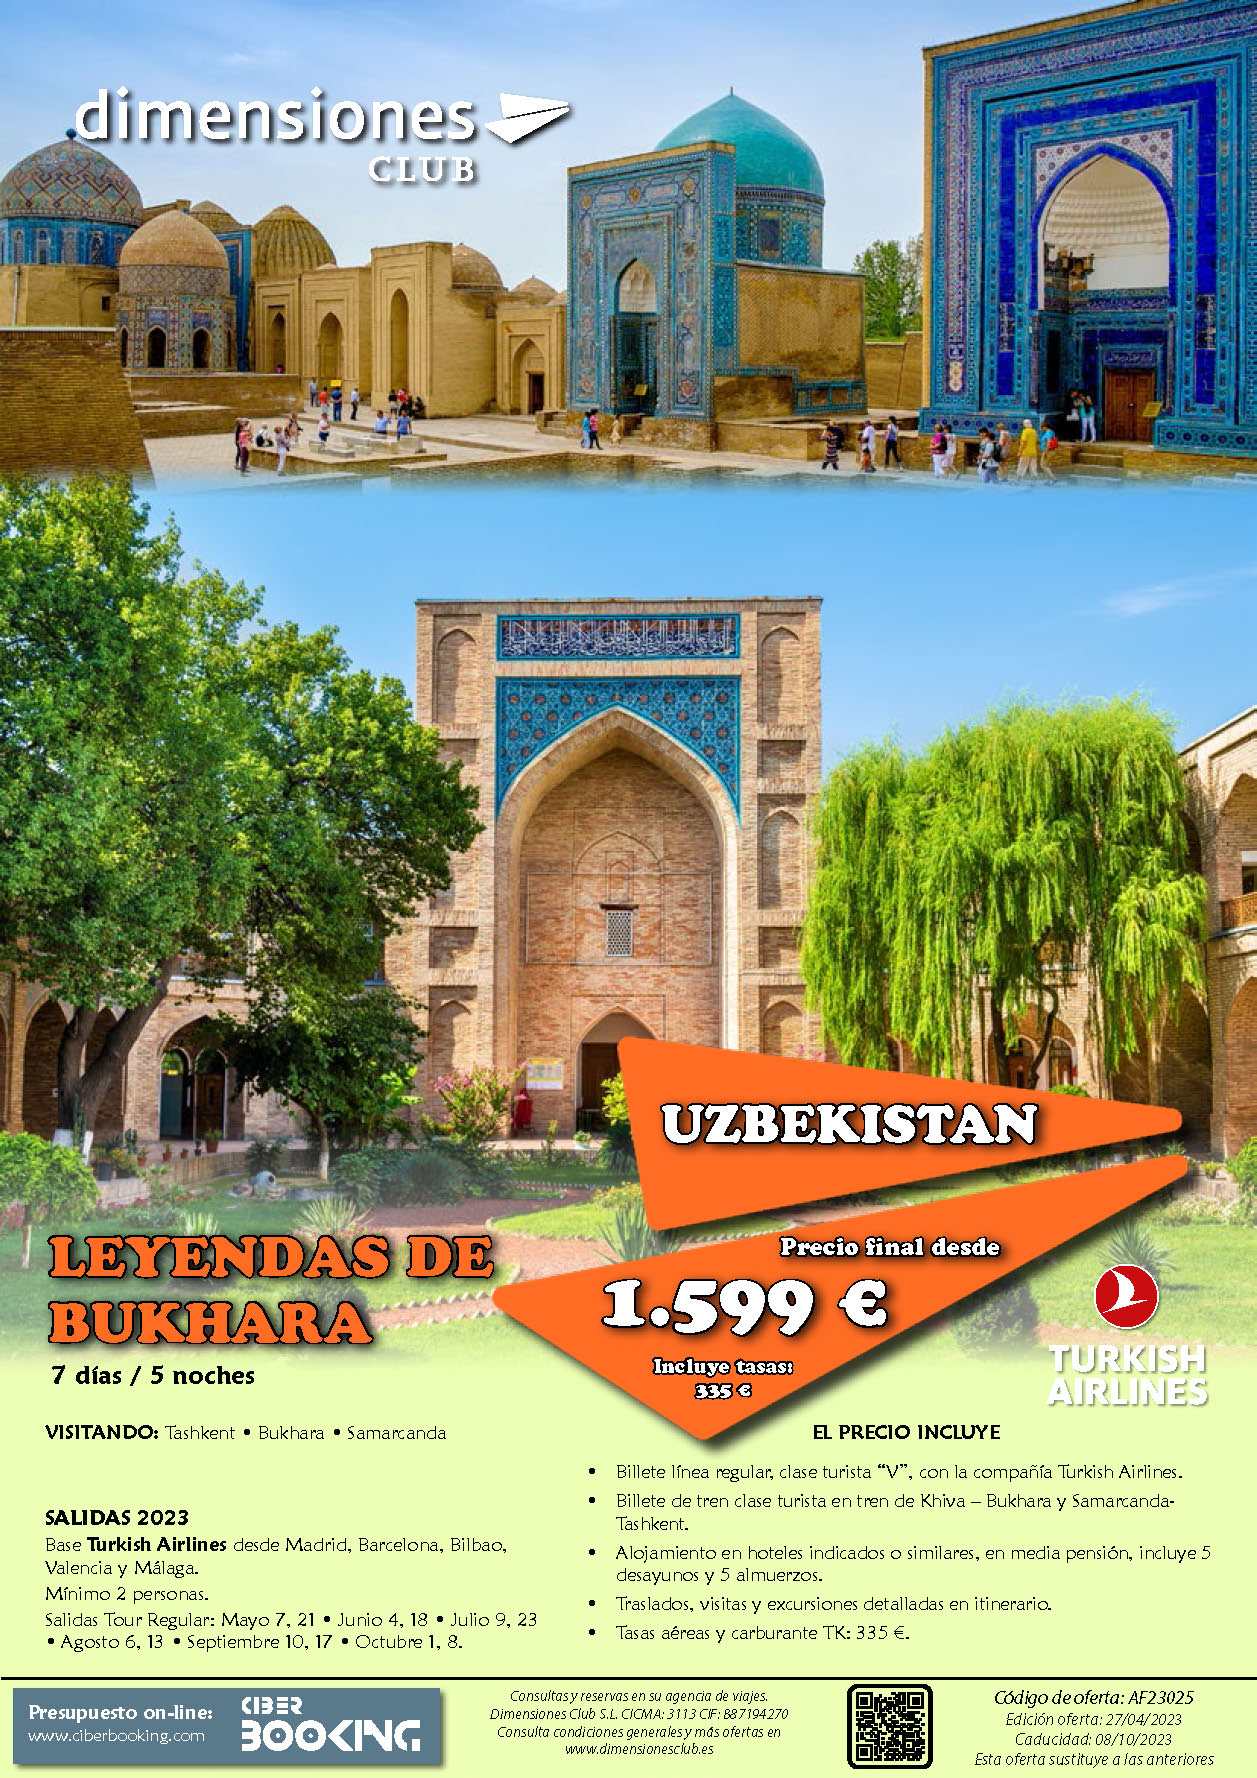 Oferta Destinos del Mundo Uzbekistan Verano 2023 Leyendas de Bukhara 7 dias salidas desde Madrid Barcelona Bilbao Valencia Malaga vuelos Turkish Airlines